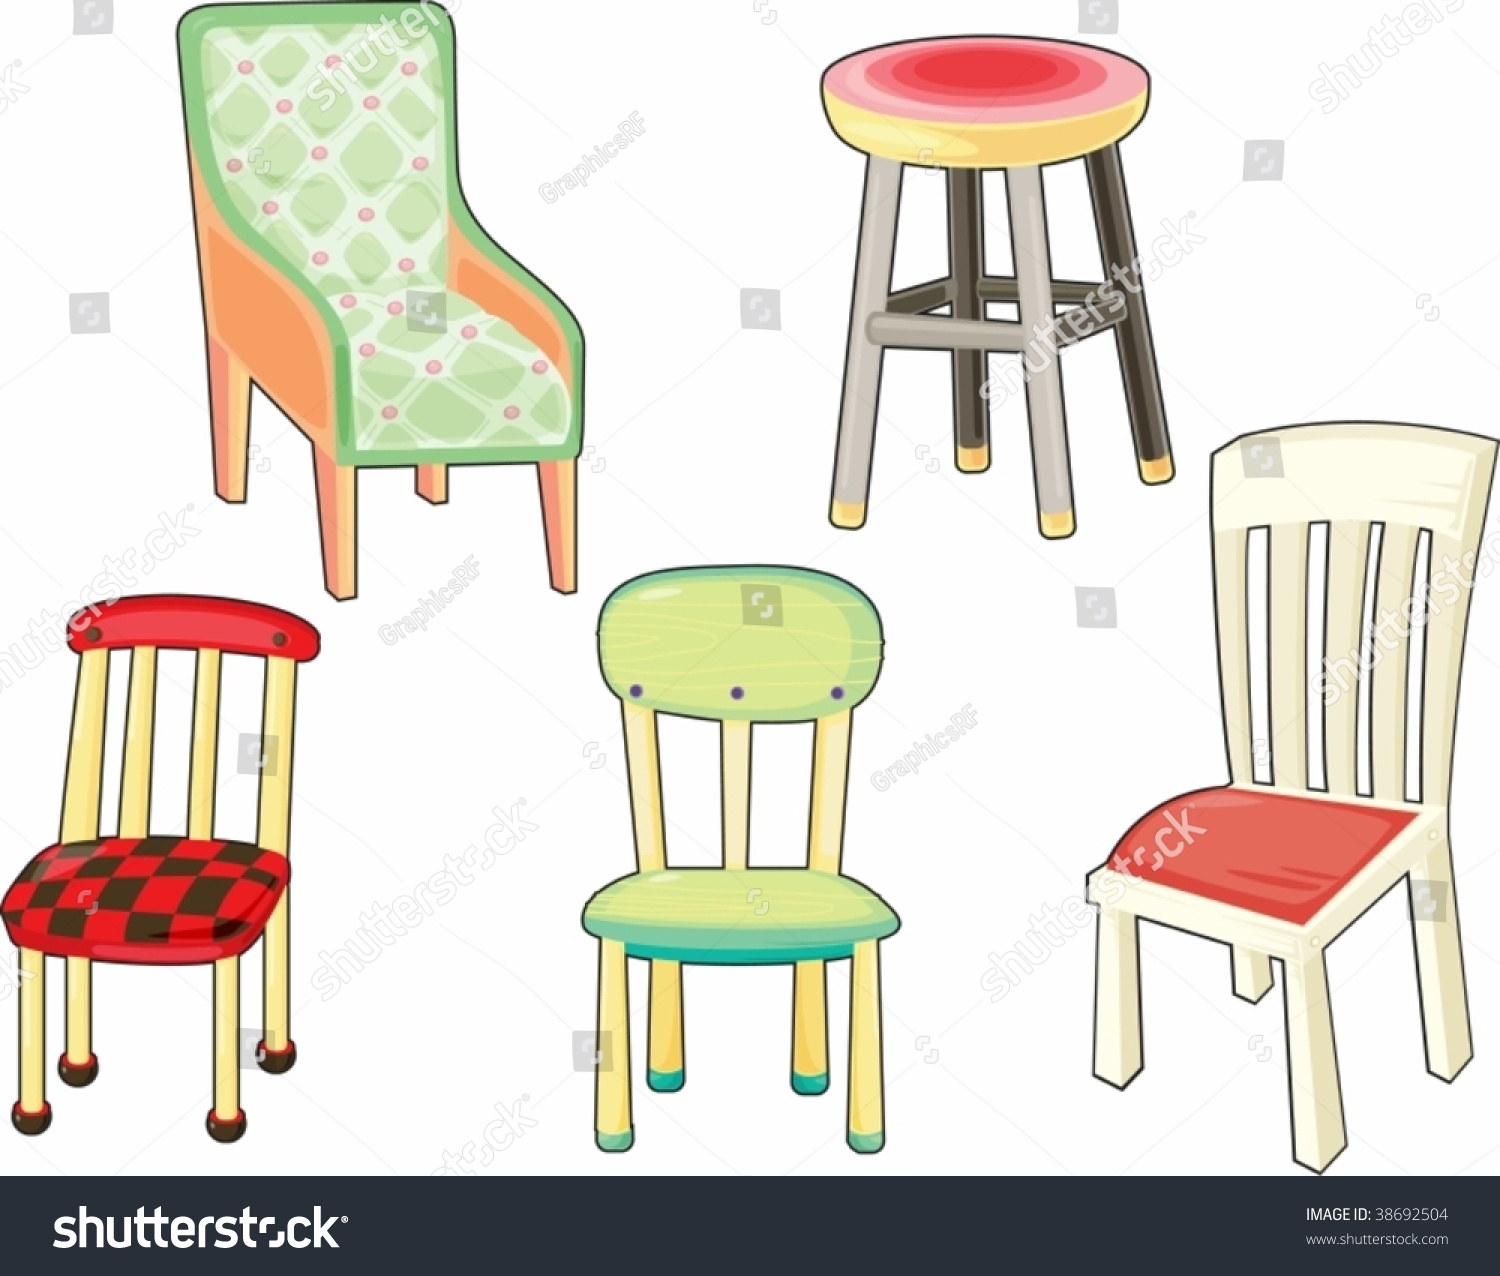 Illustration Chairs On White Stock Vector 38692504 - Shutterstock